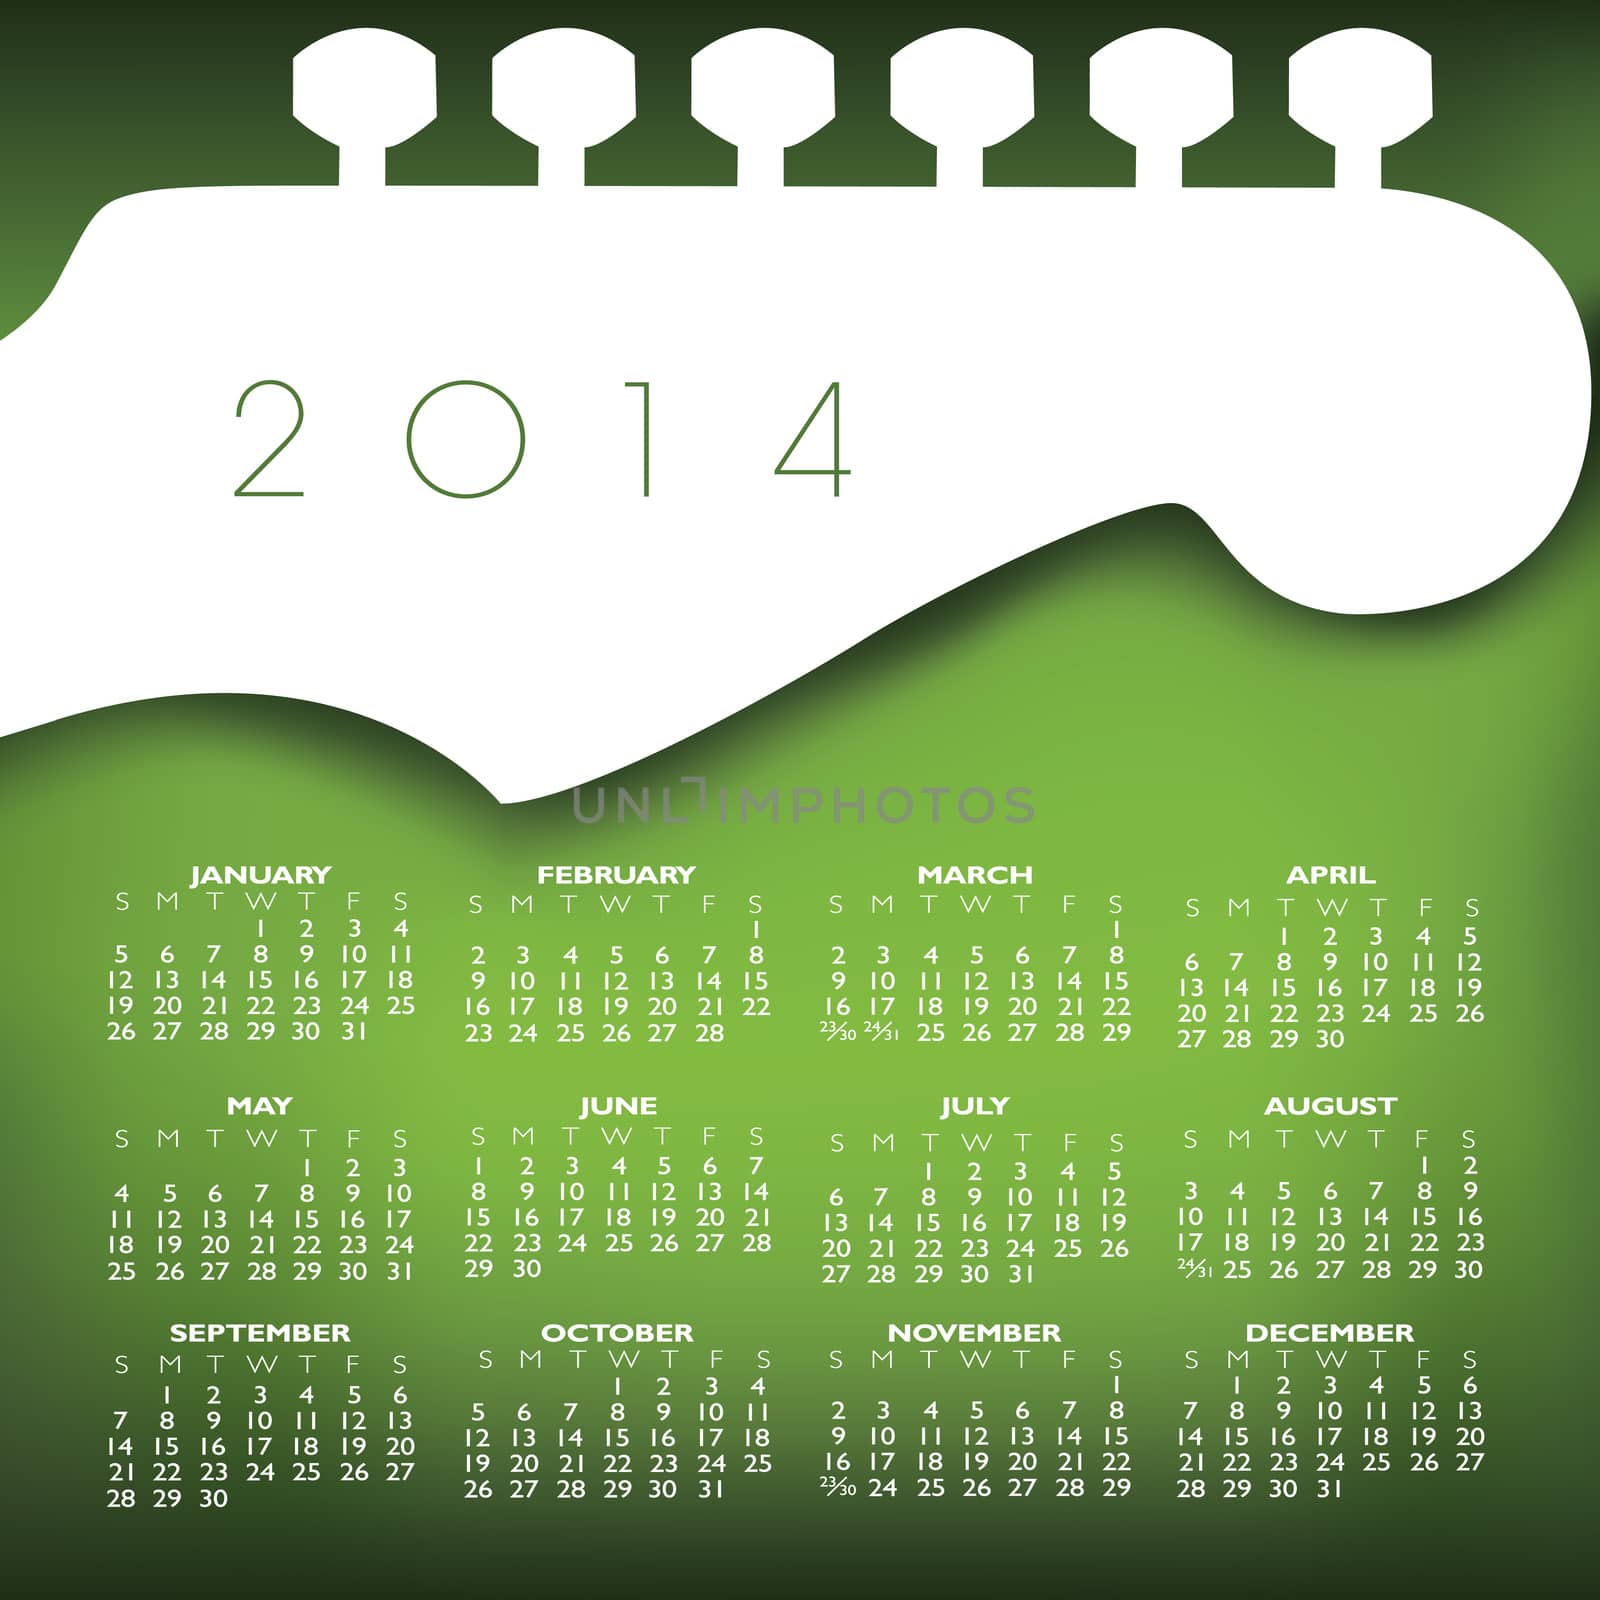 2014 Guitar Creative Calendar for Print or Web